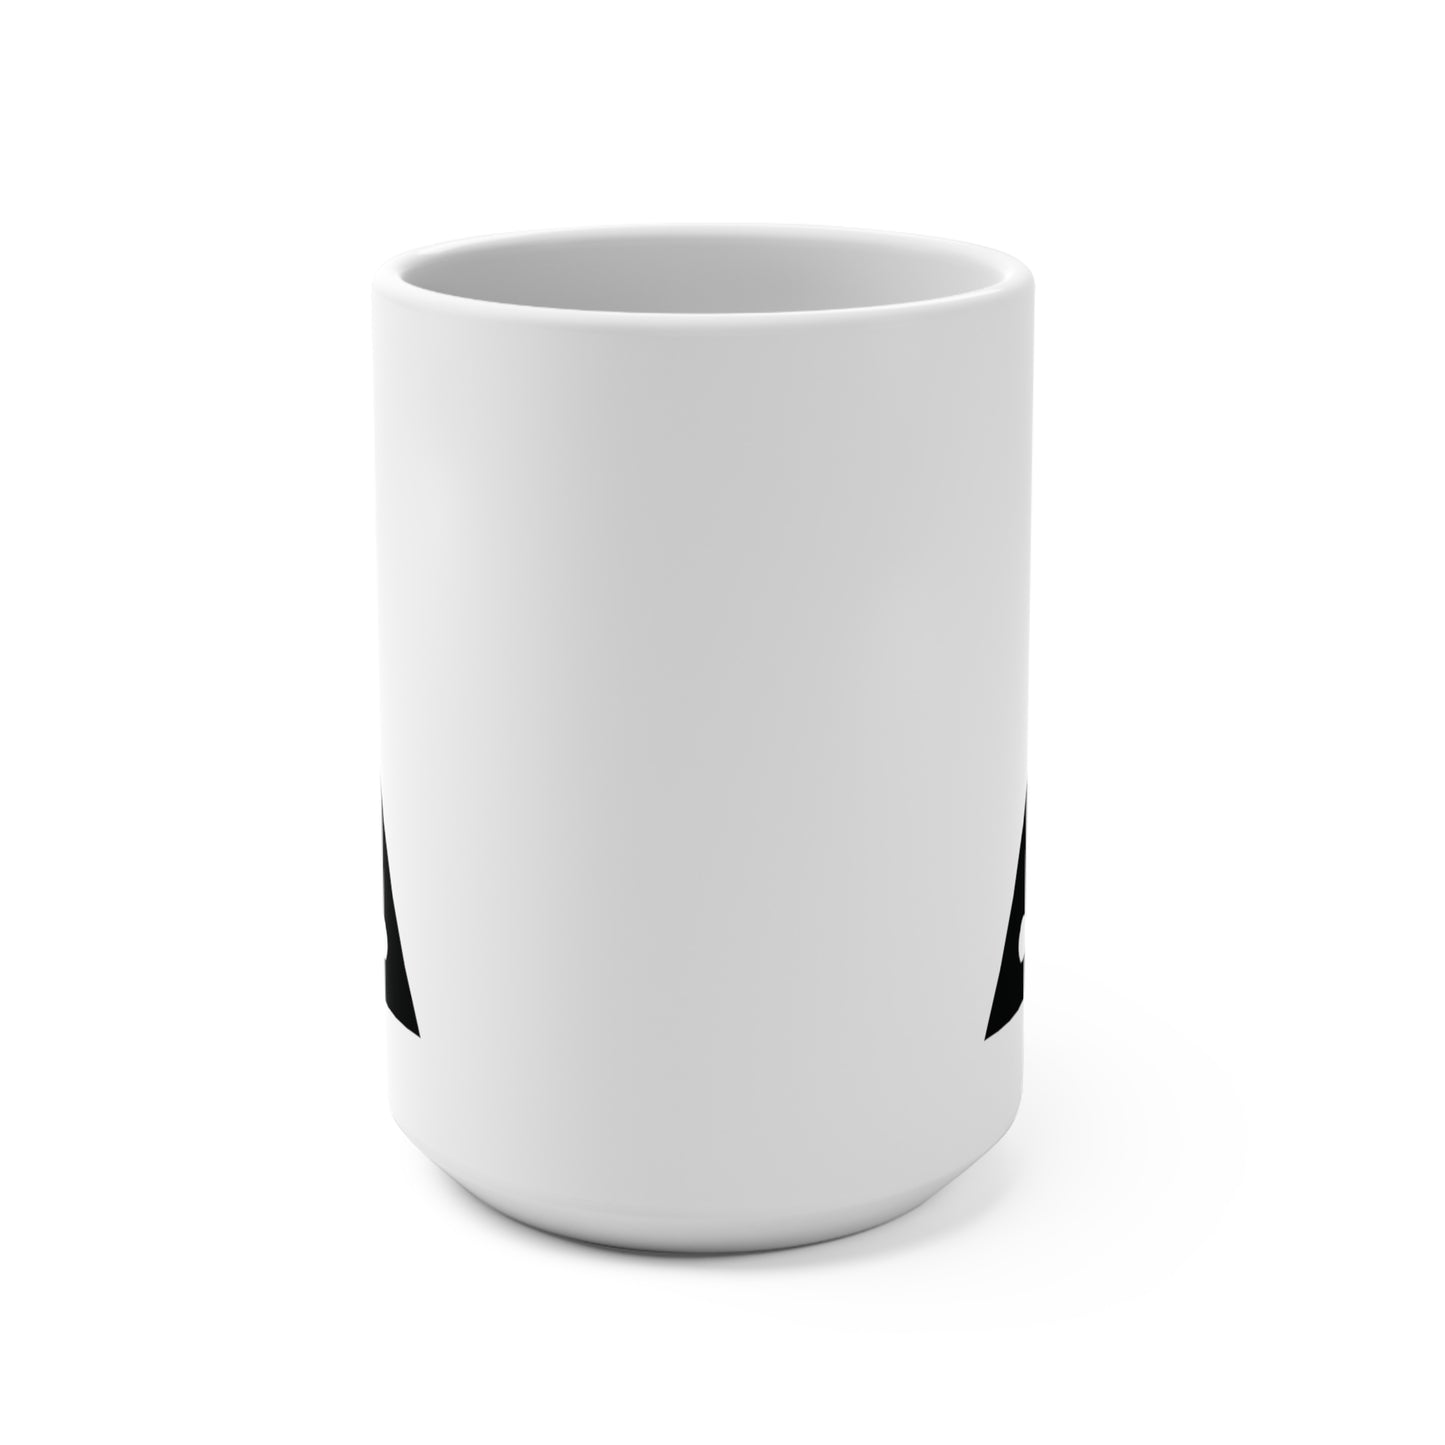 Aria Personalized Custom Christmas Tree Coffee Mug